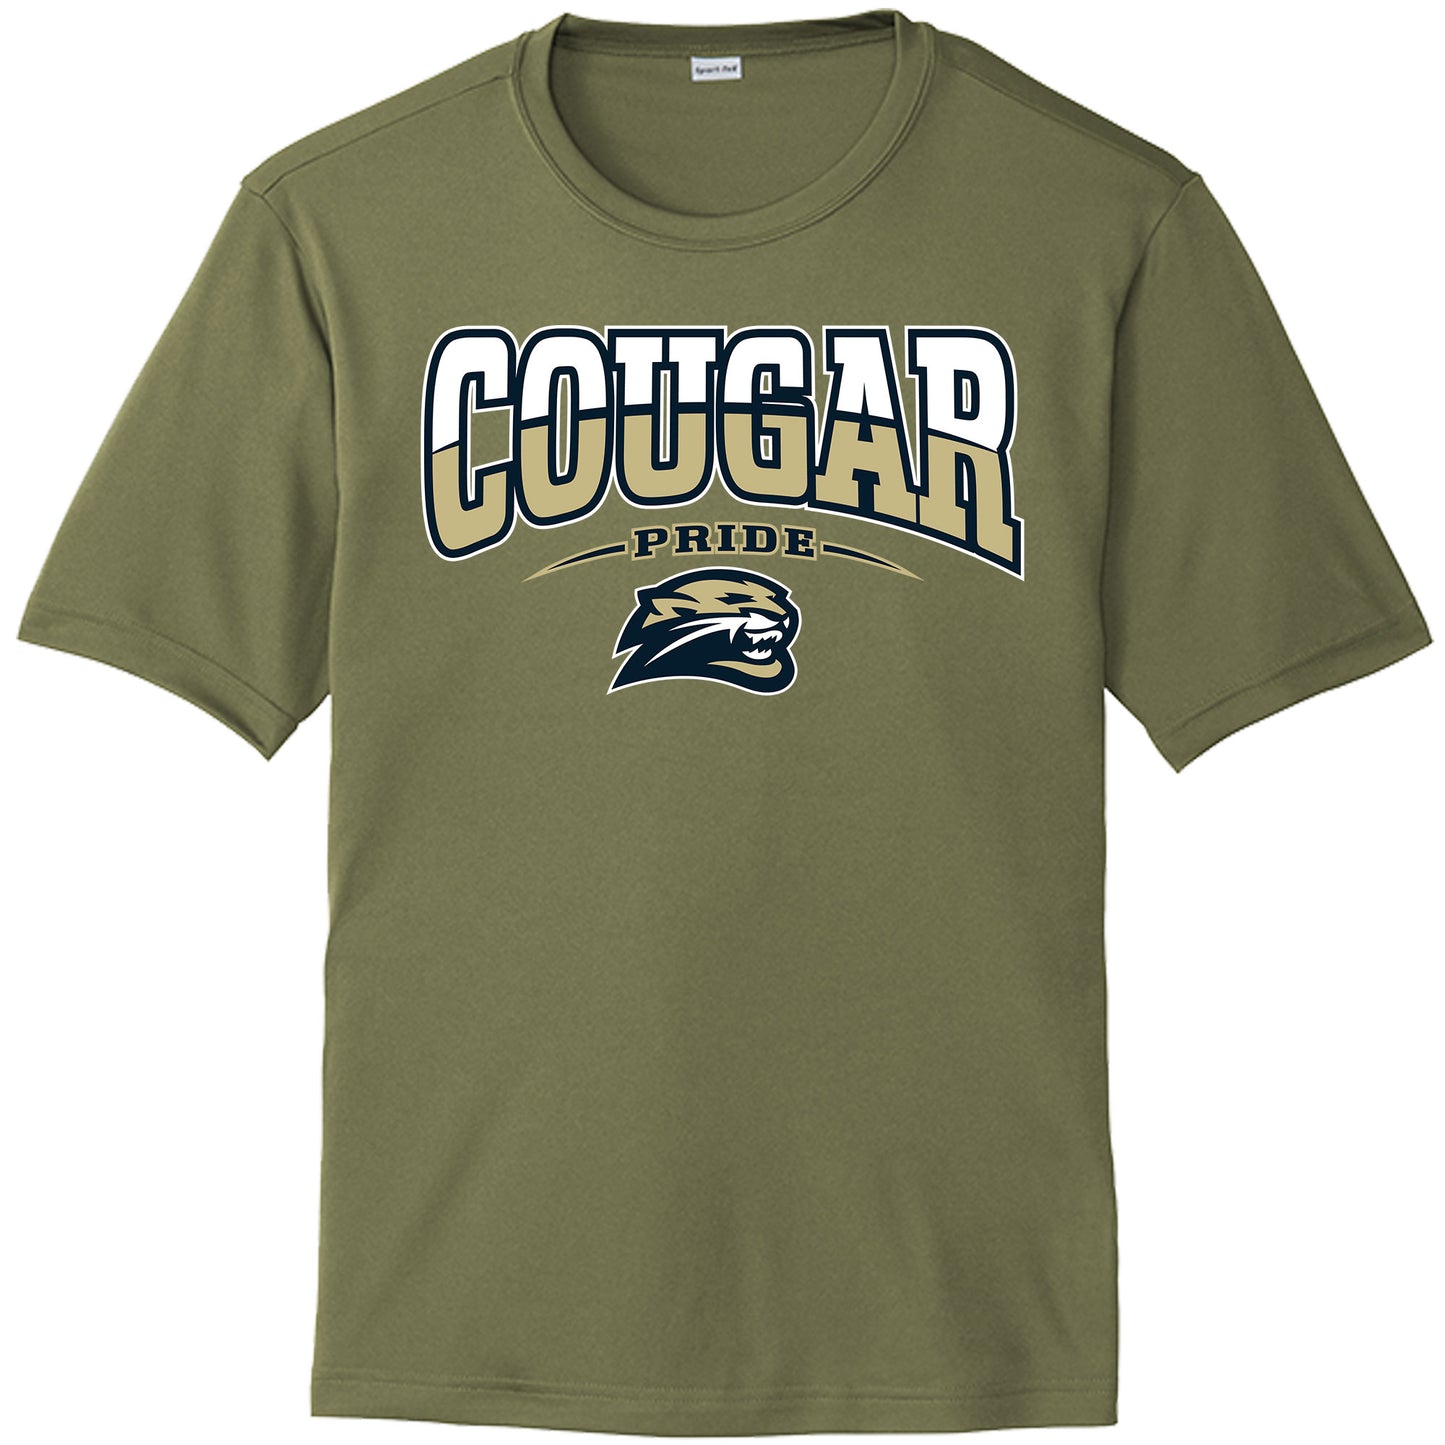 Durant High School Drifit Shirt  "Cougars Pride"